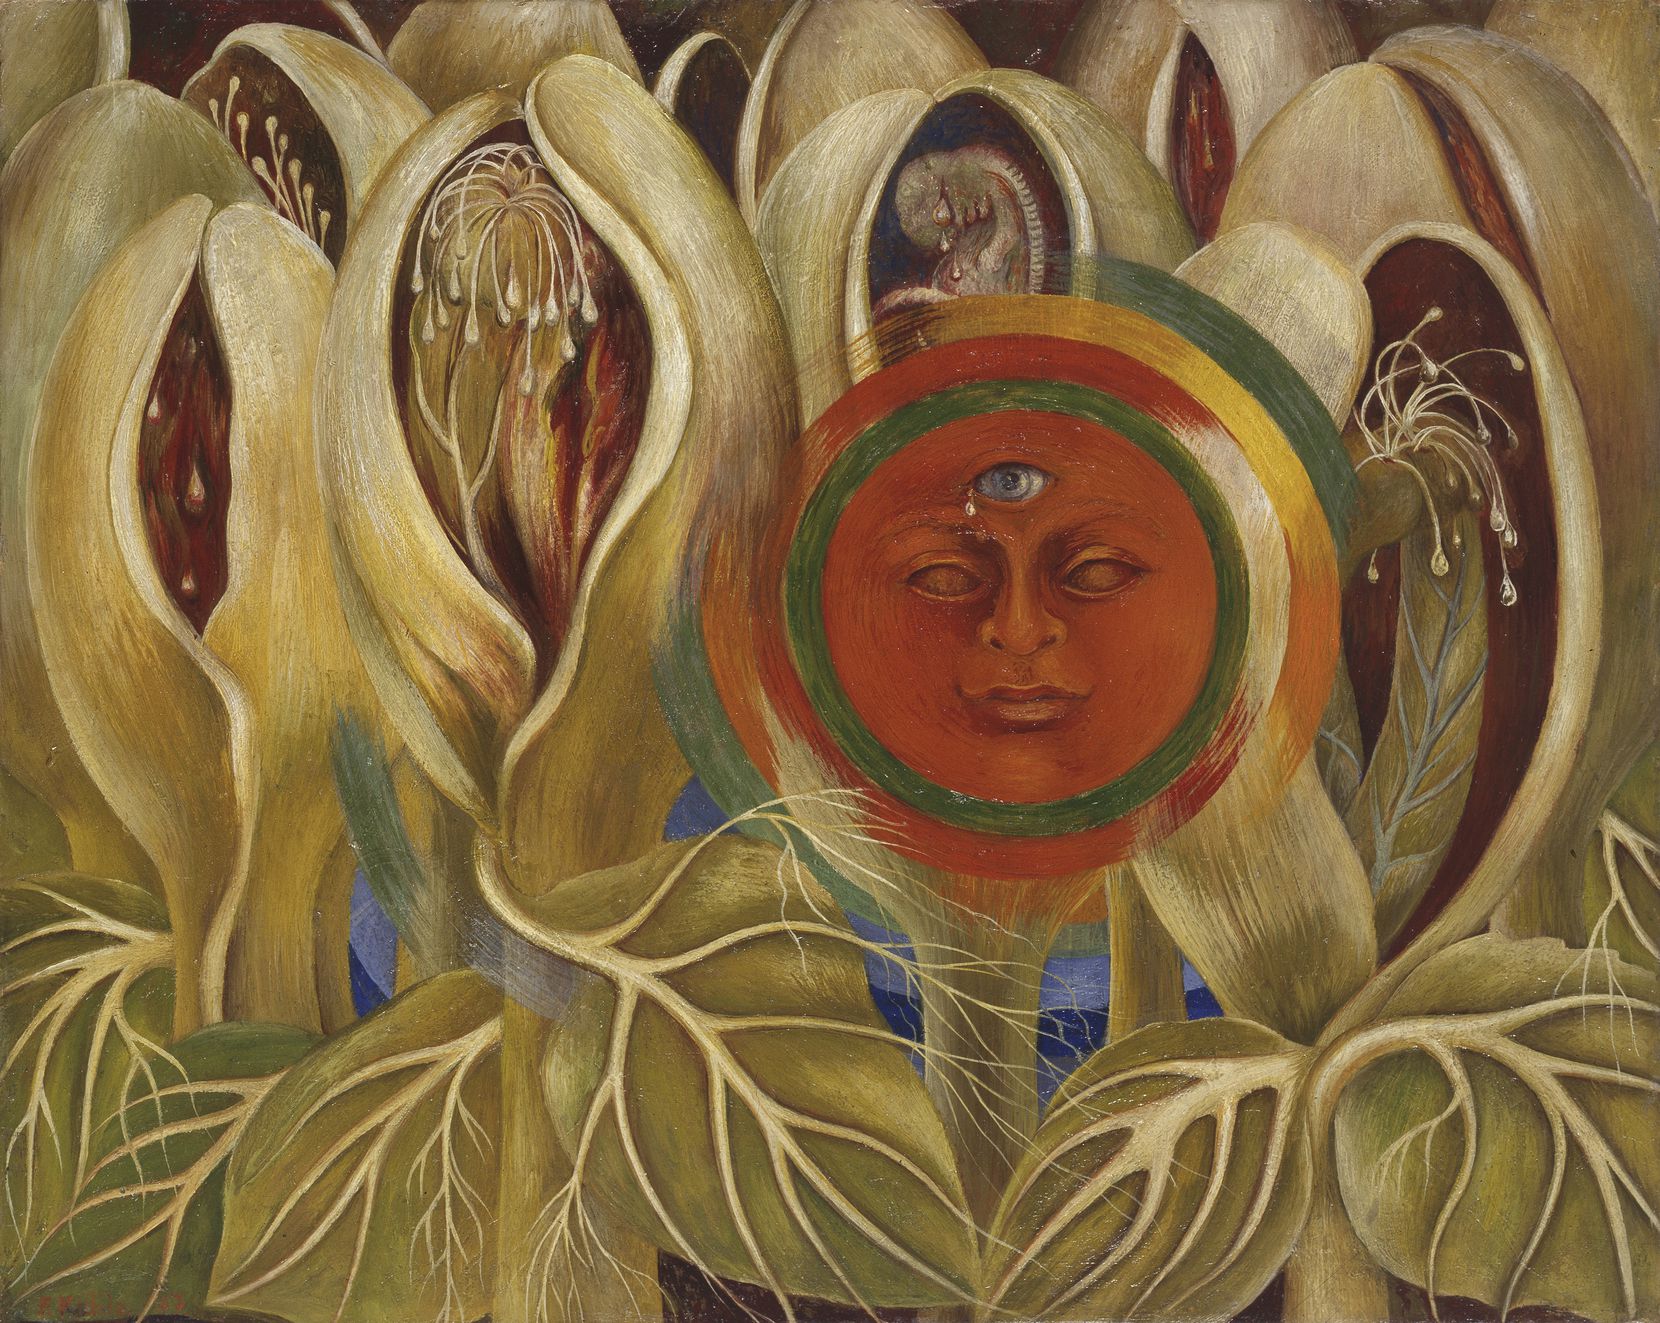 Frida Kahlo, Sun and Life, 1947, óleo sobre masonita, colección privada, cortesía de Galer a Arvil.  2021 Banco de México Diego Rivera Frida Kahlo Museums Trust, México, DF / Artists Rights Society (ARS), Nueva York